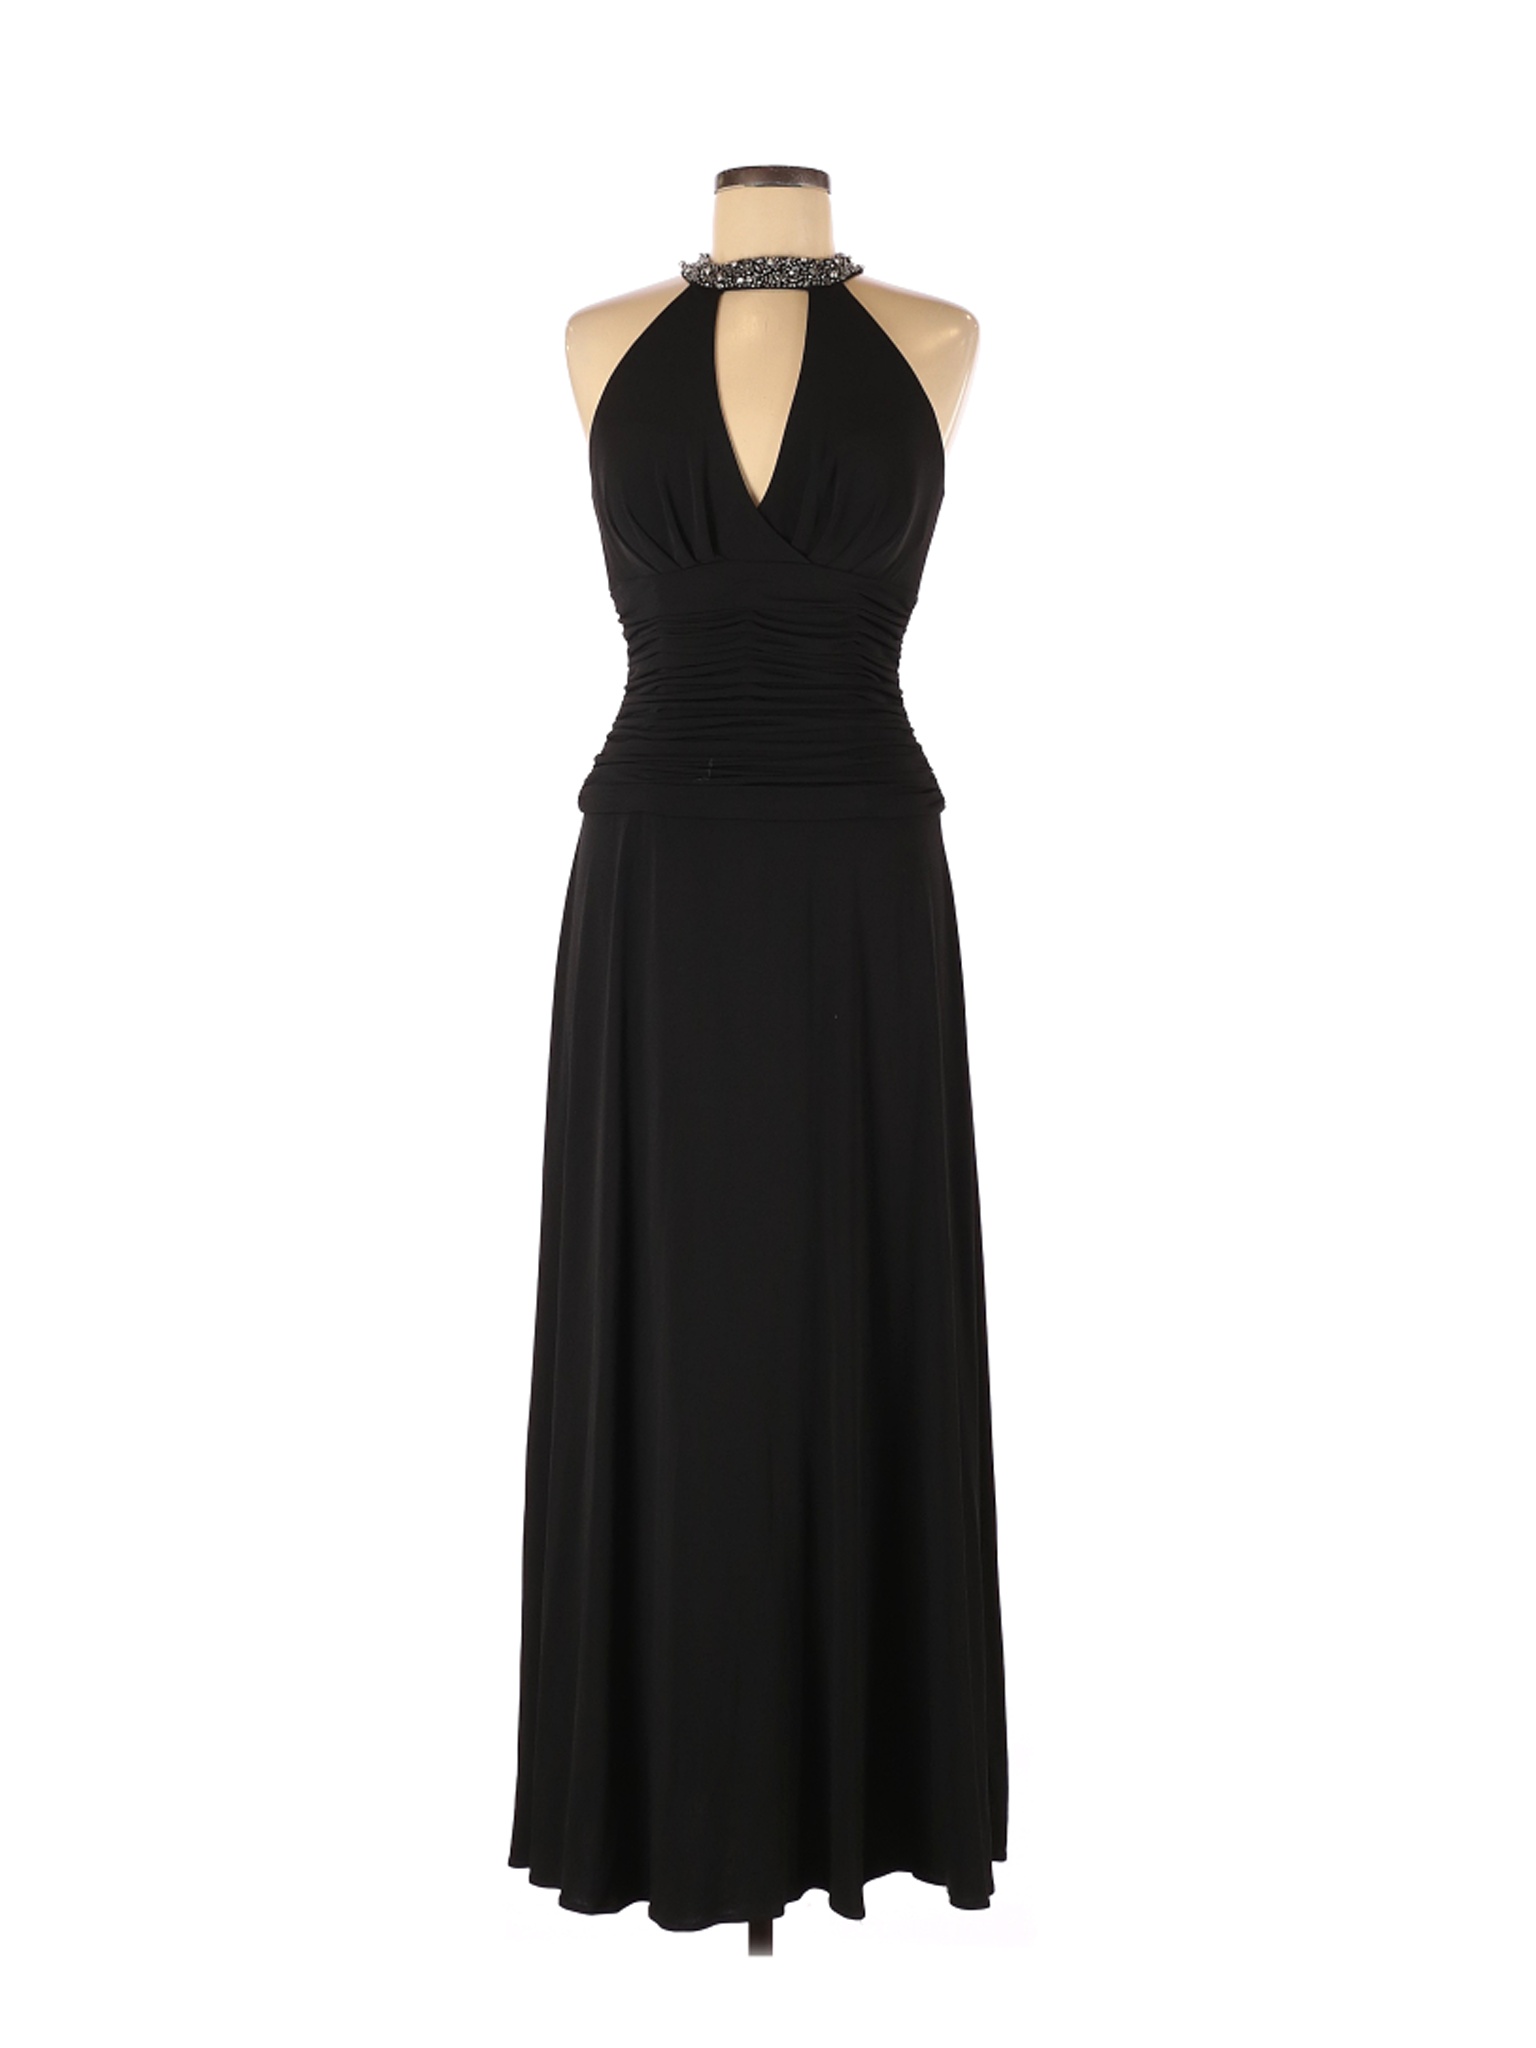 Carabella Collection Women Black Cocktail Dress 6 | eBay